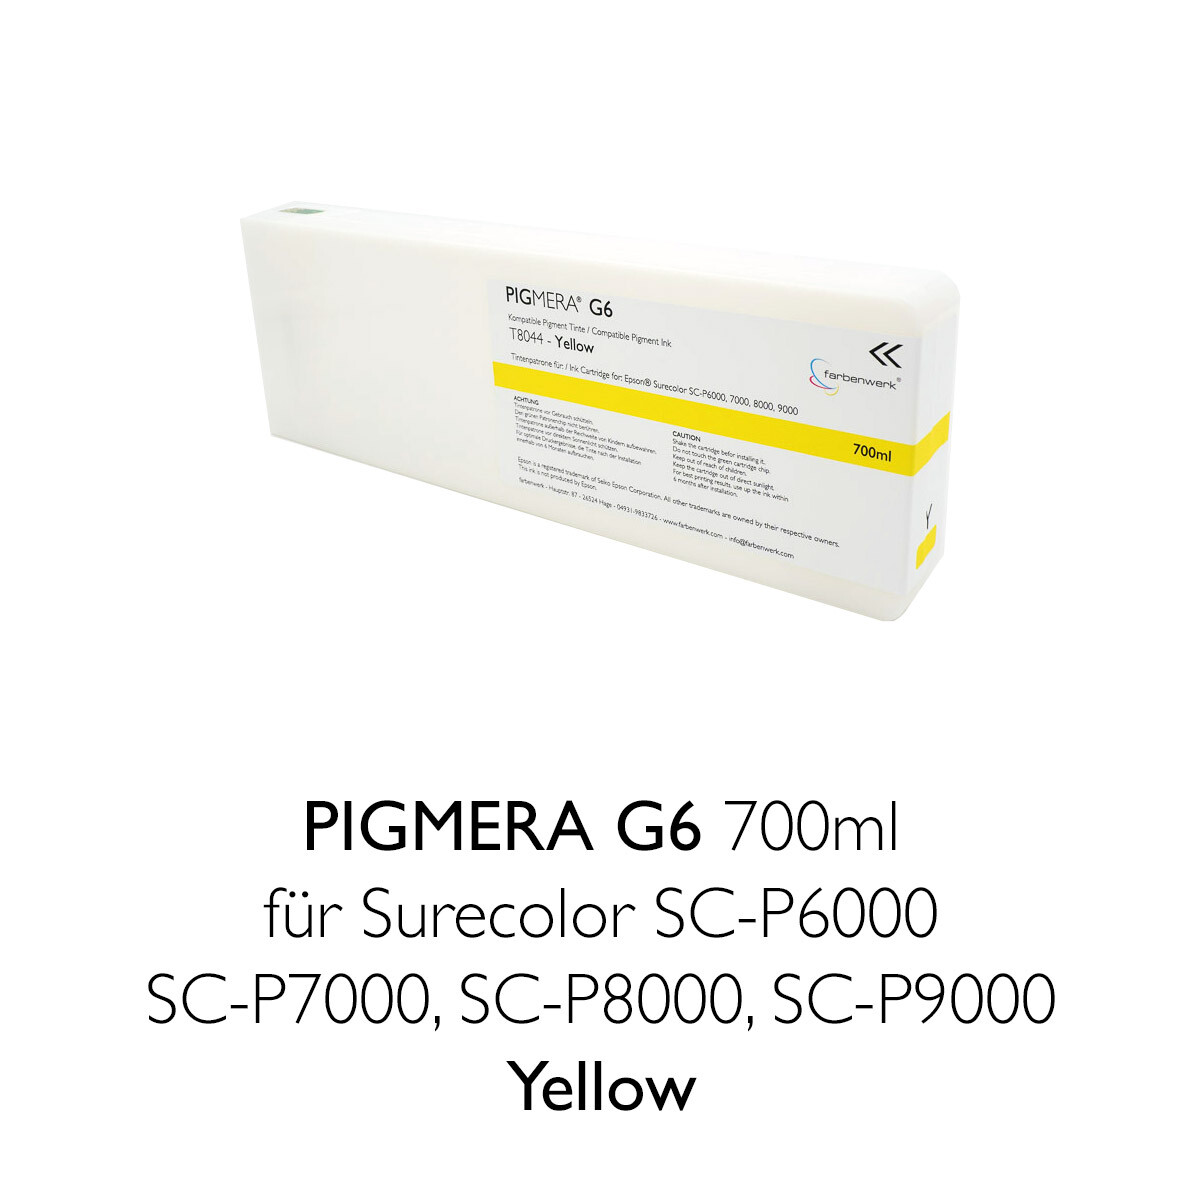 farbenwerk Pigmera G6 ink cartridge 700ml T8044 Yellow